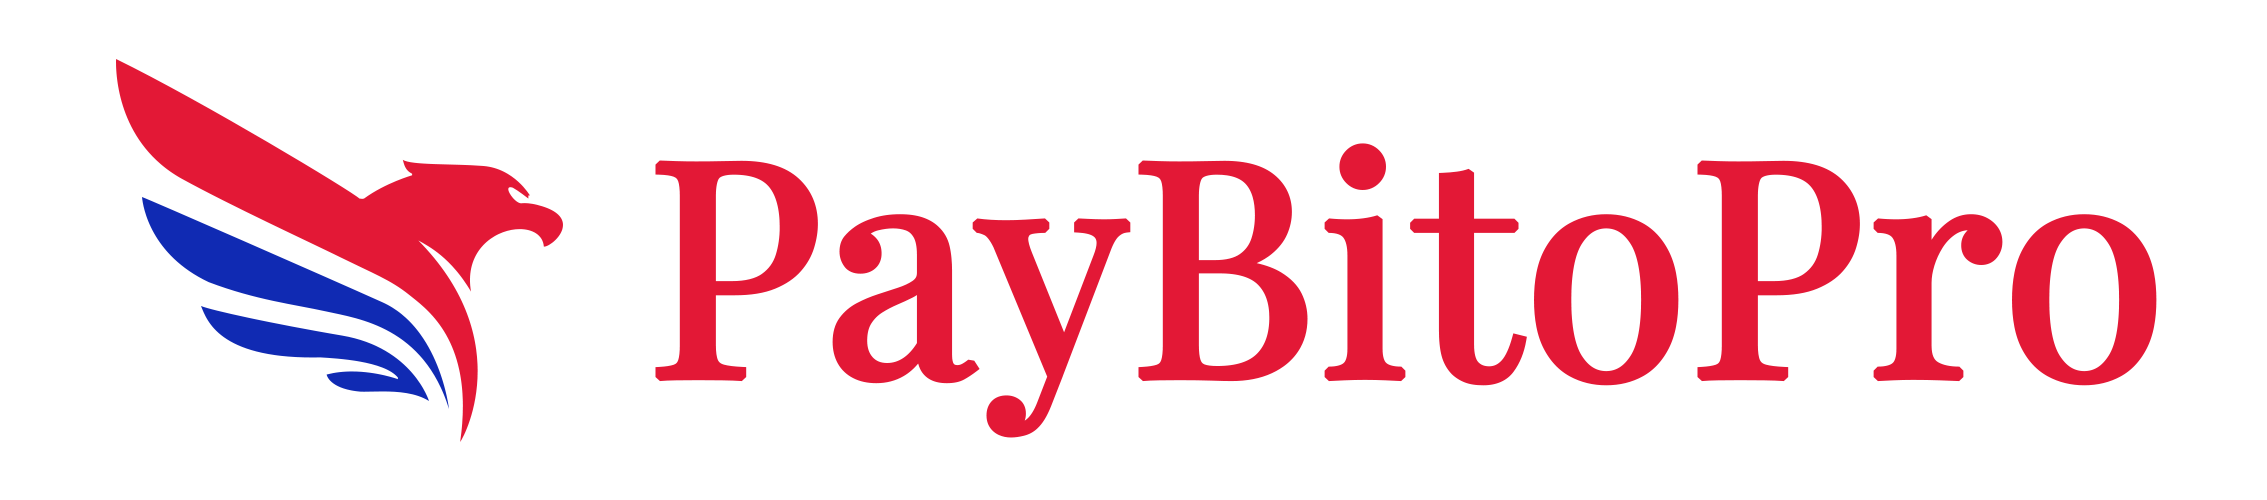 PayBitoPro Logo Secure